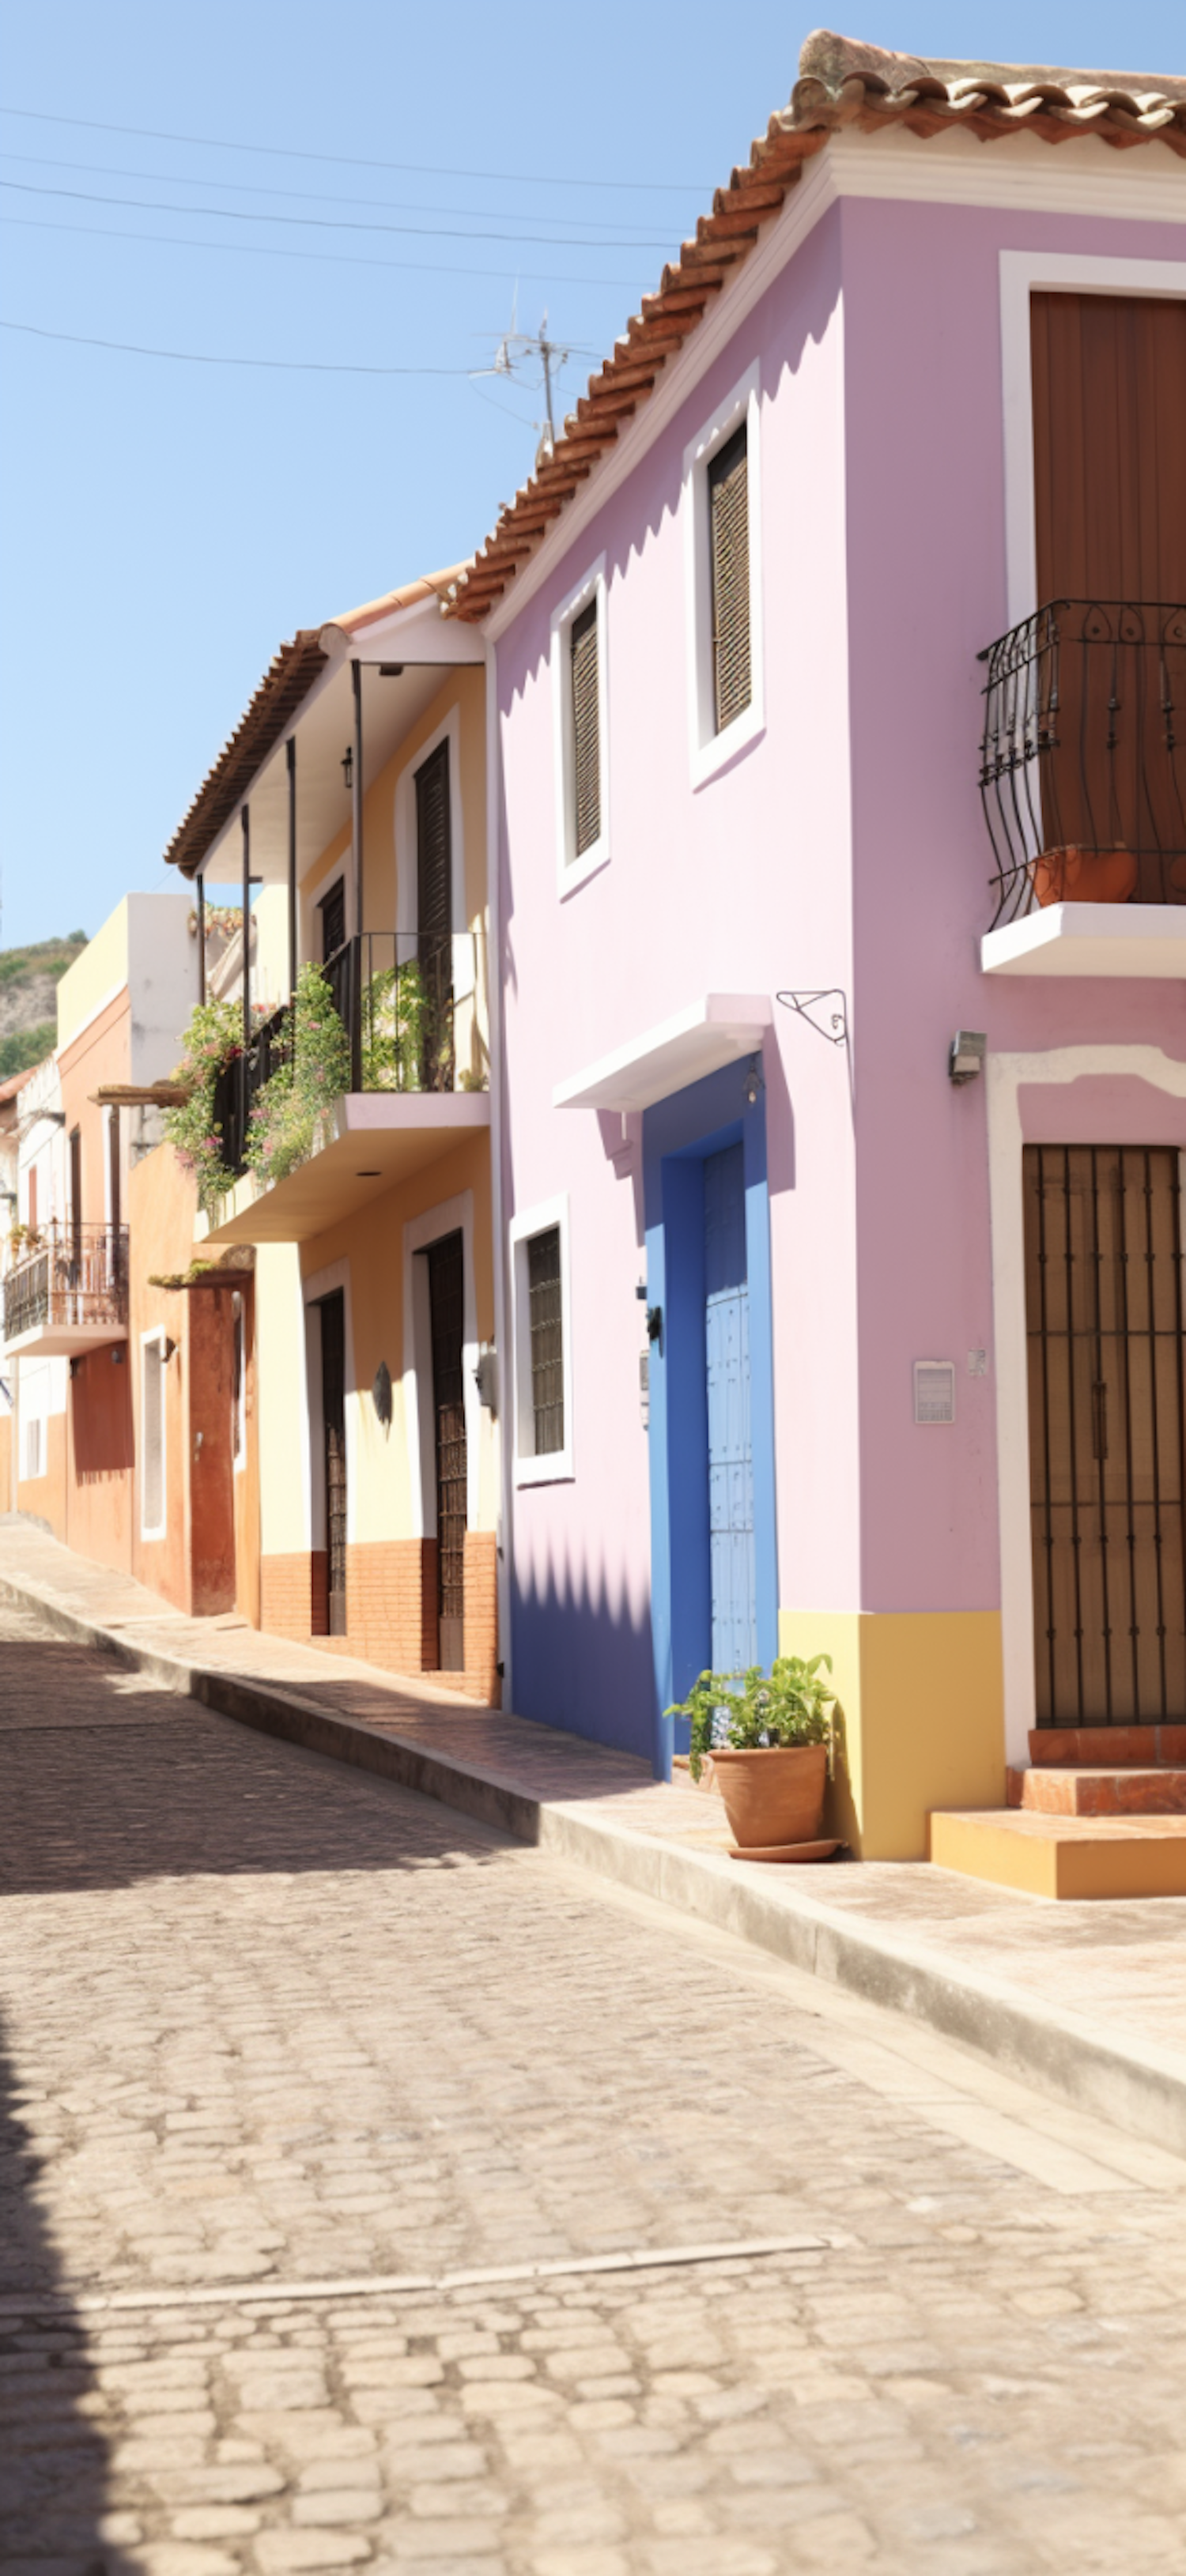 Quaint Cobblestone Streetscape with Colorful Mediterranean Houses